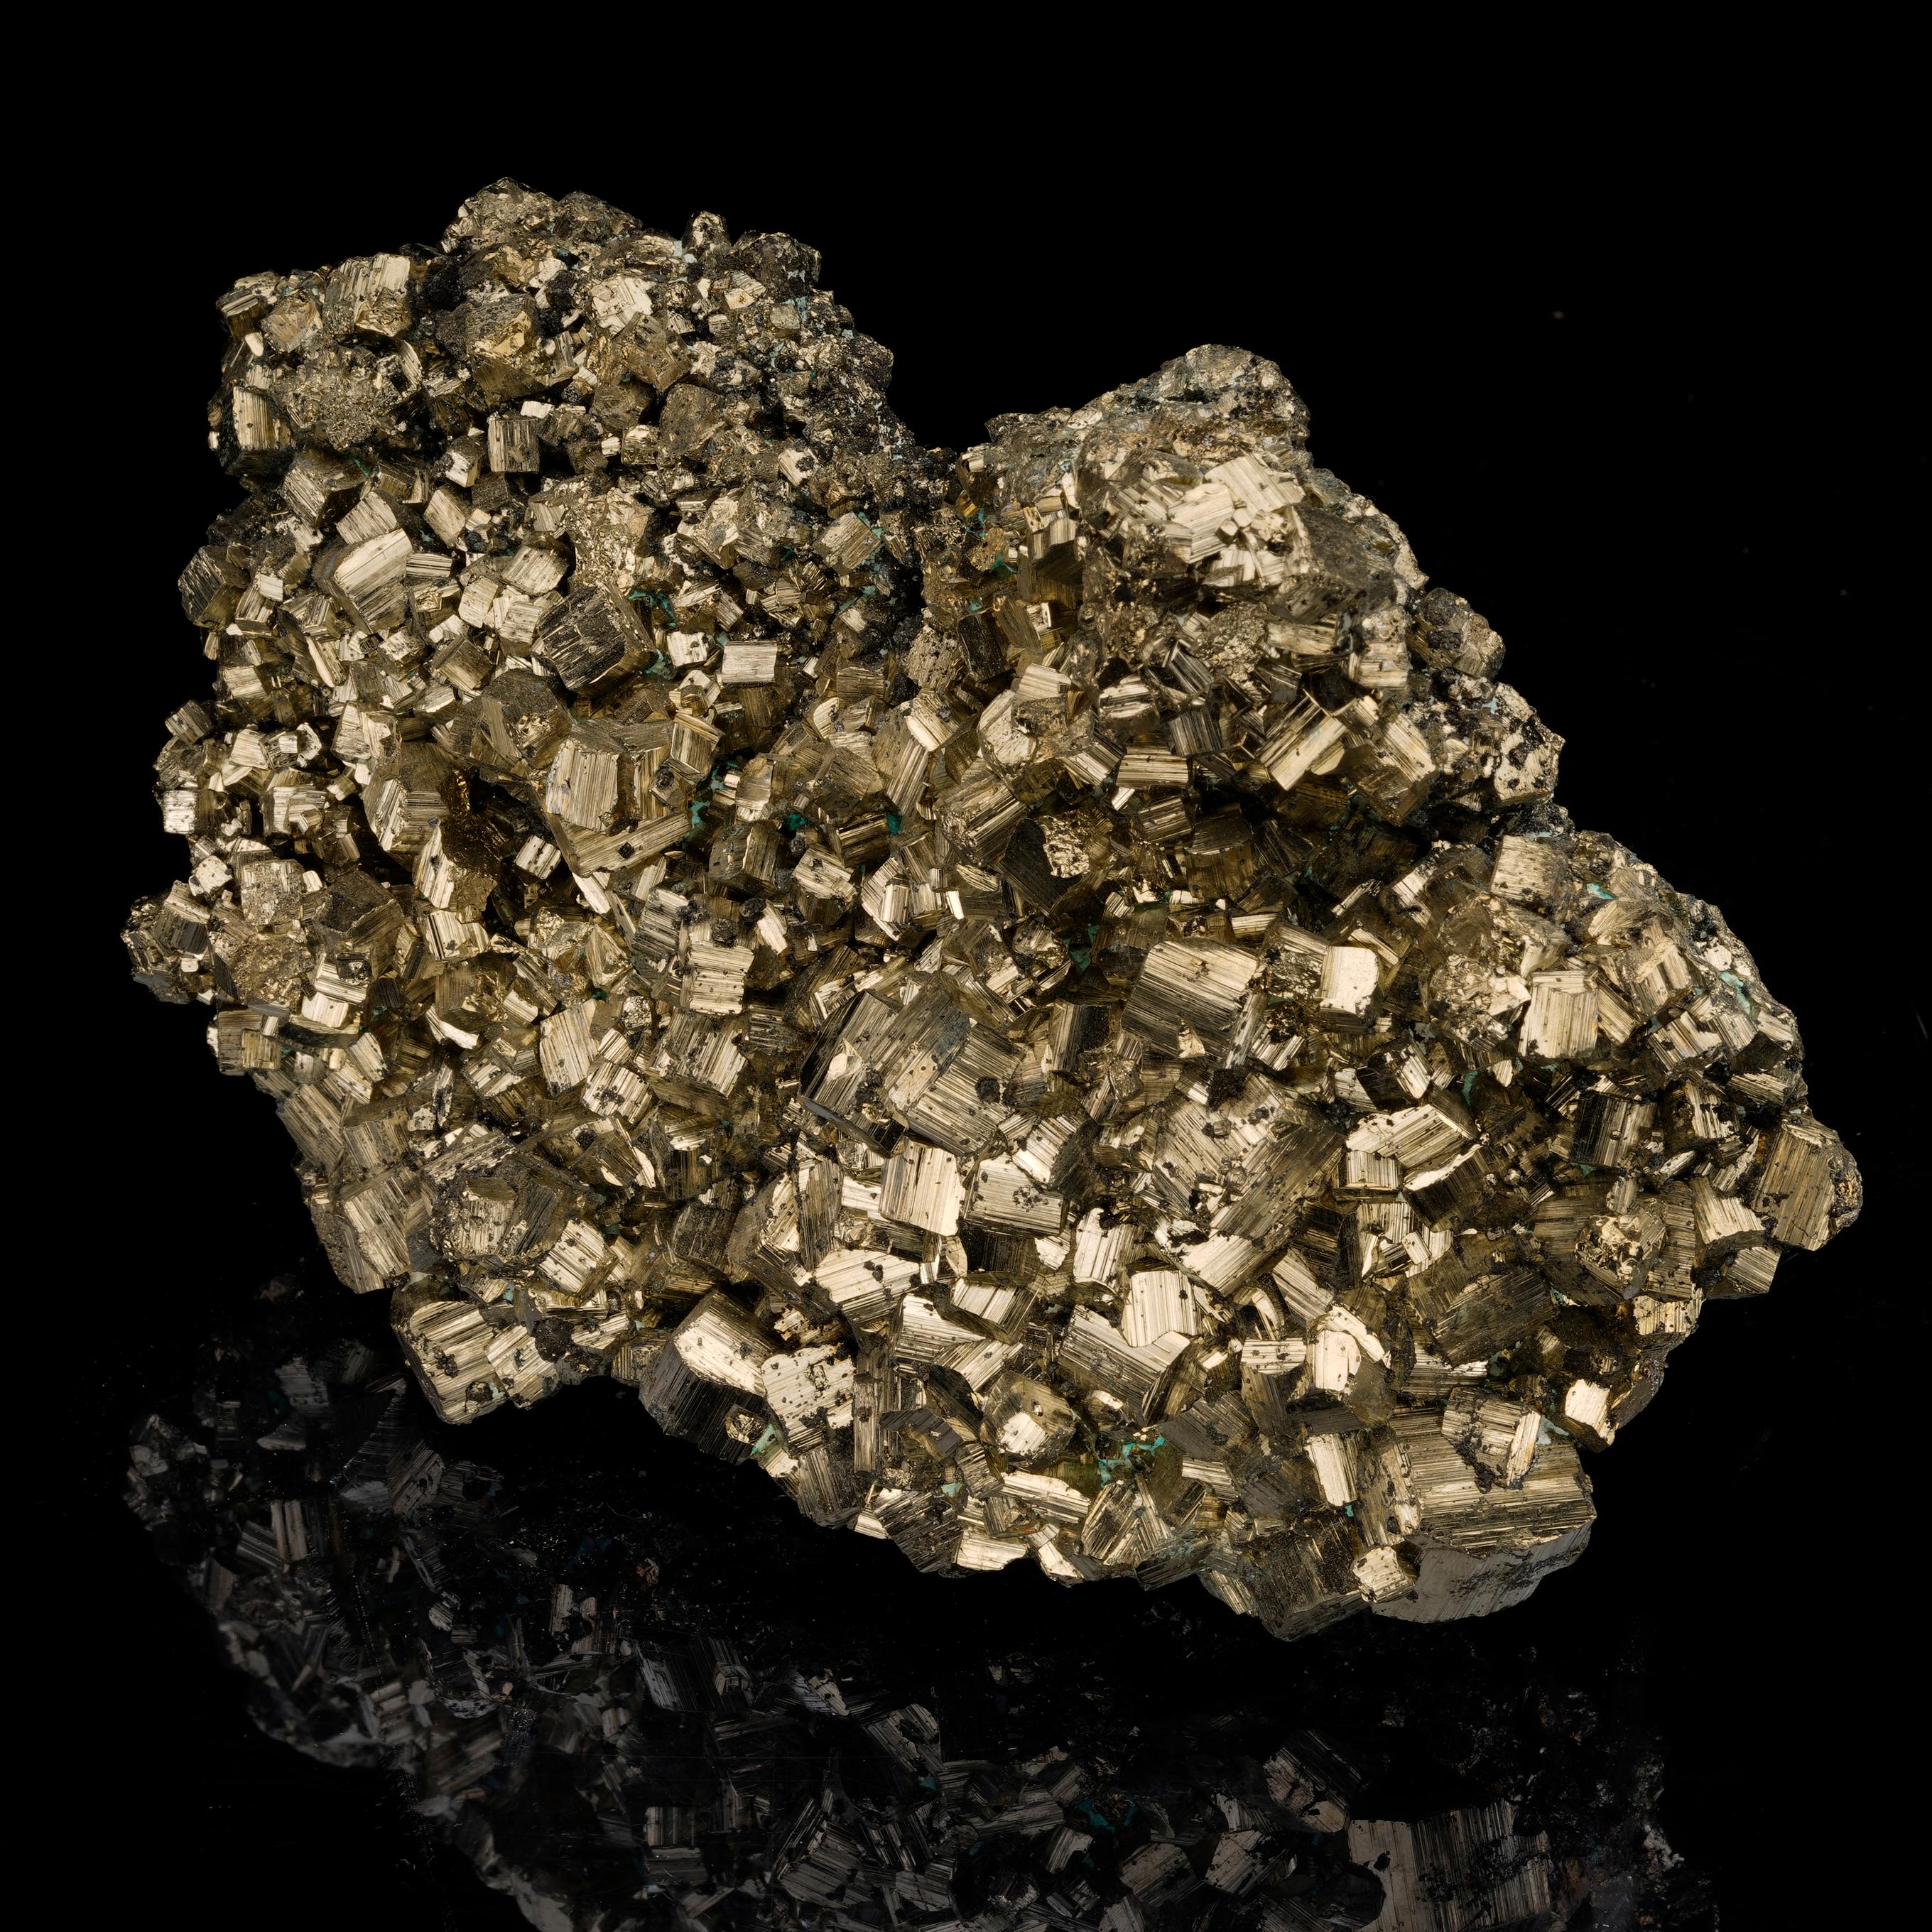 pyrite deposits